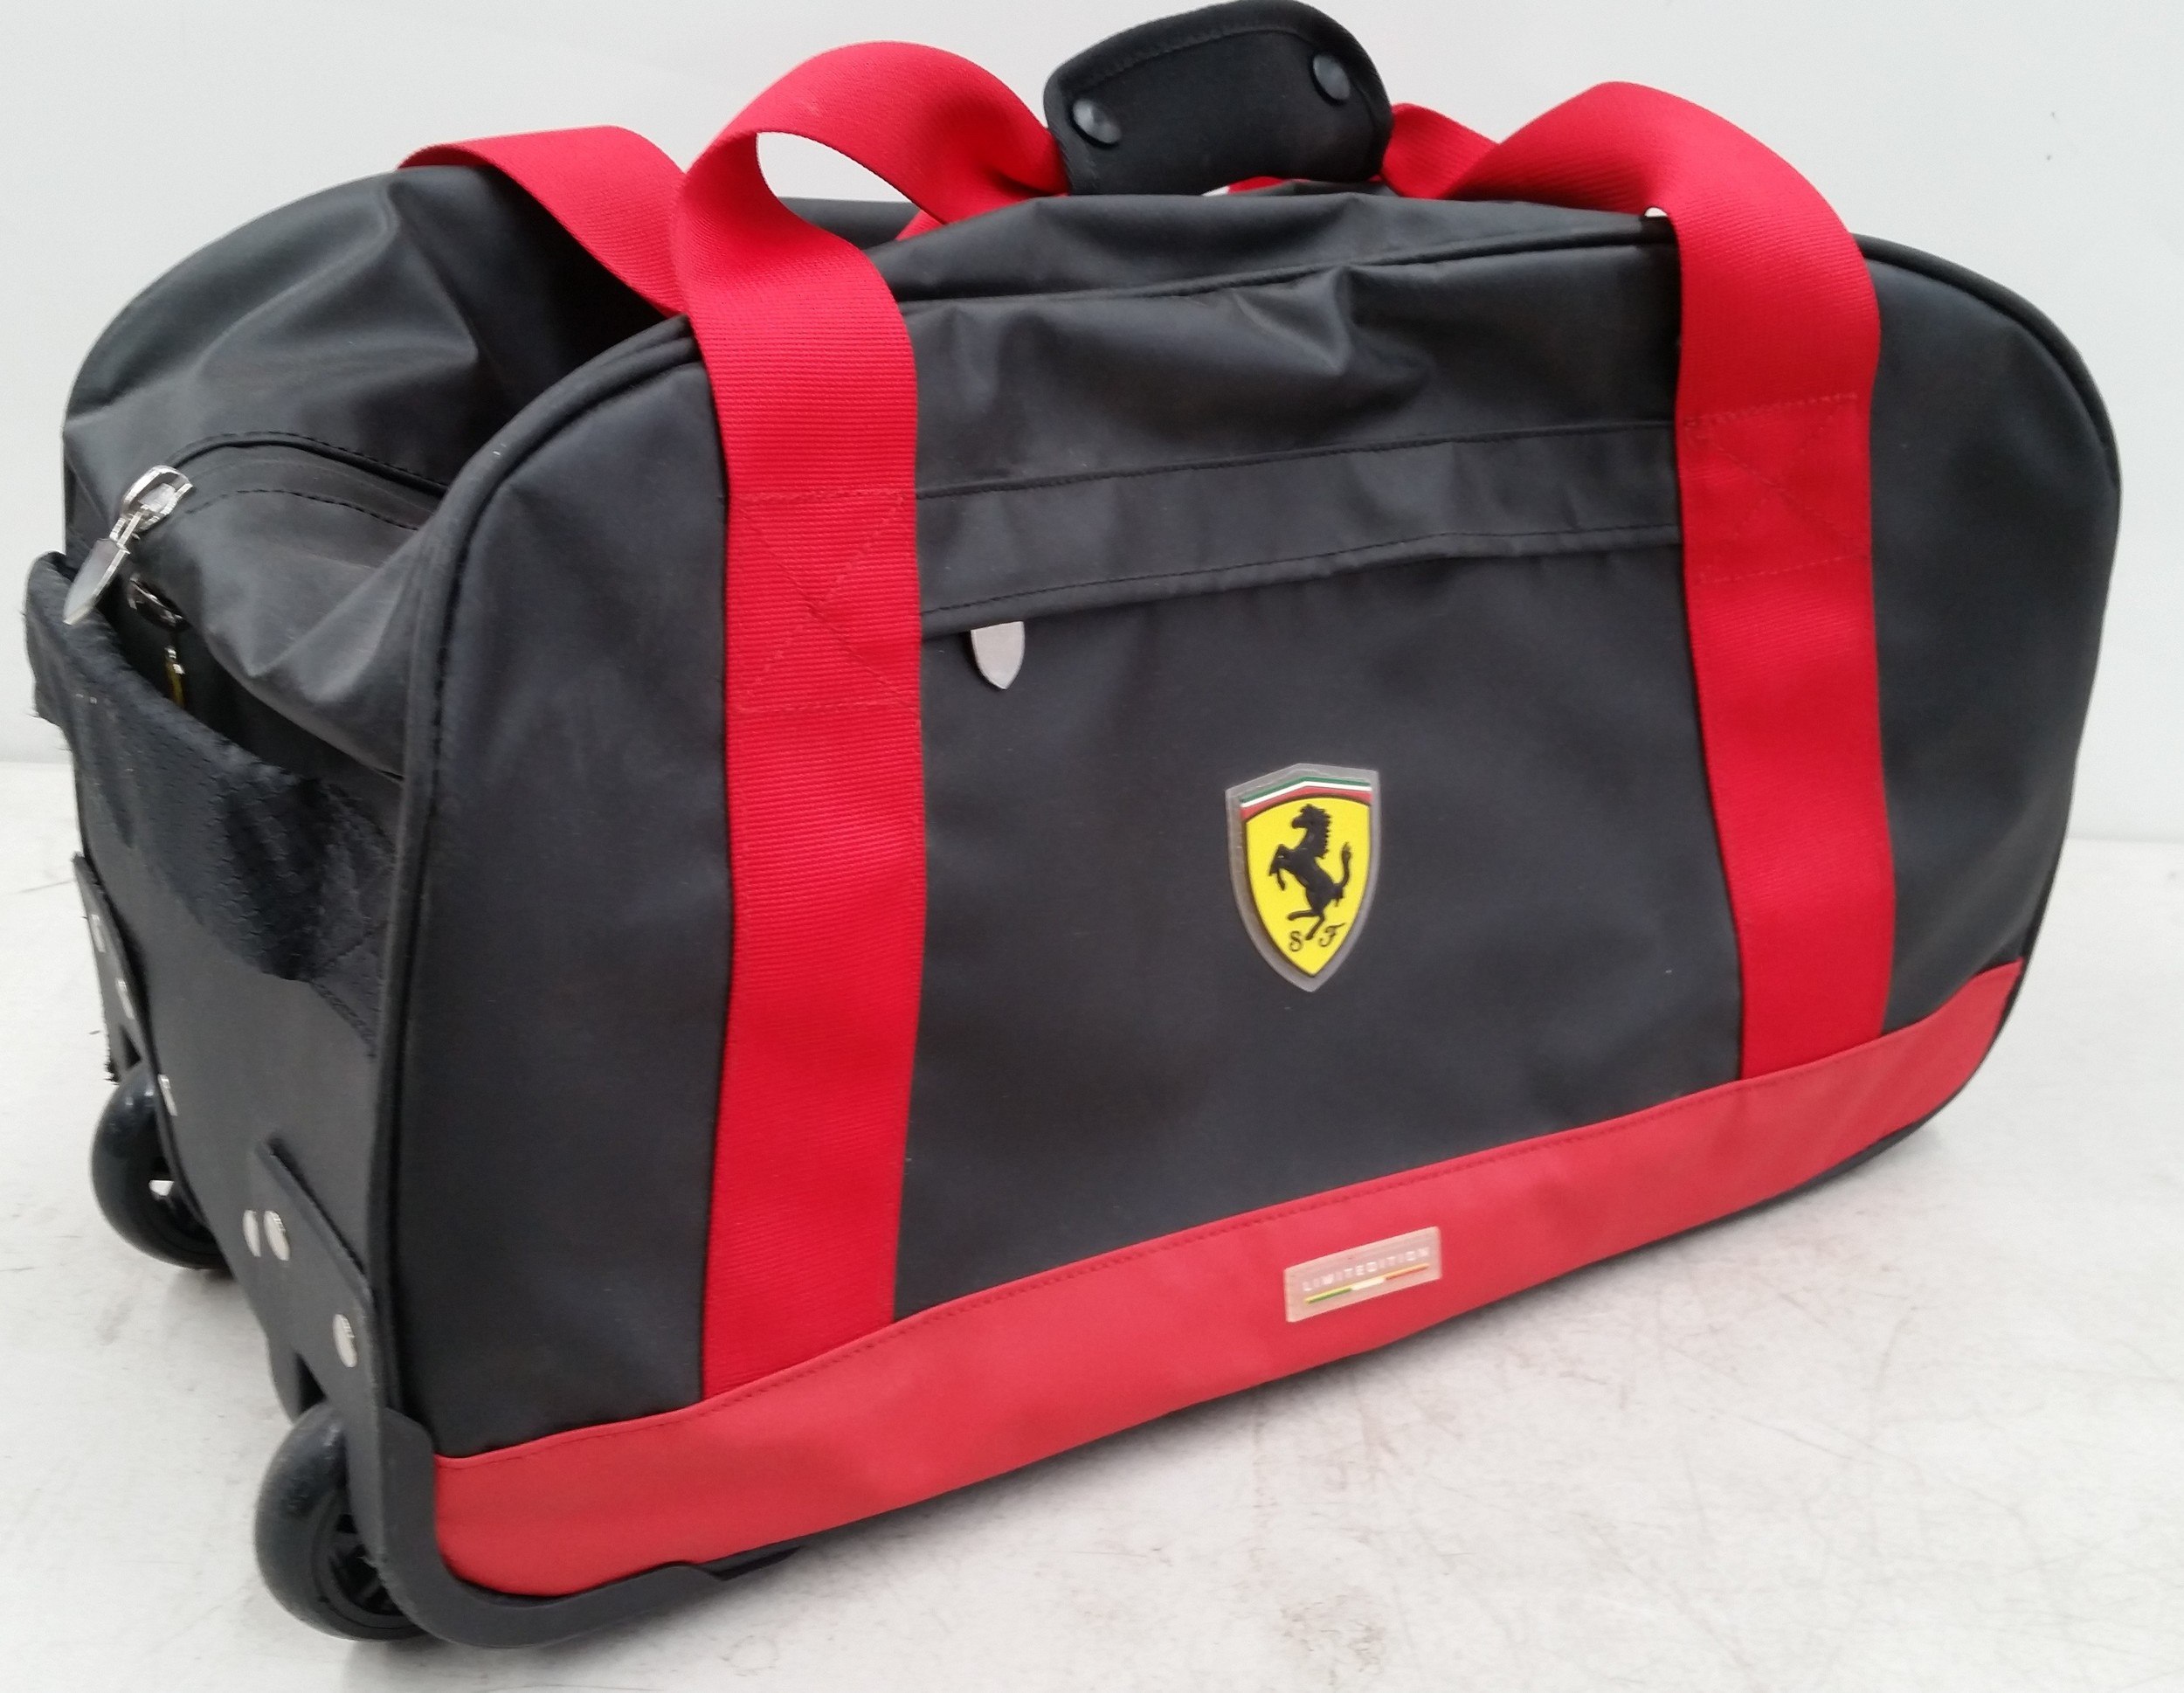 Limited Edition Ferrari Wheeled - Lot 1003370 | ALLBIDS